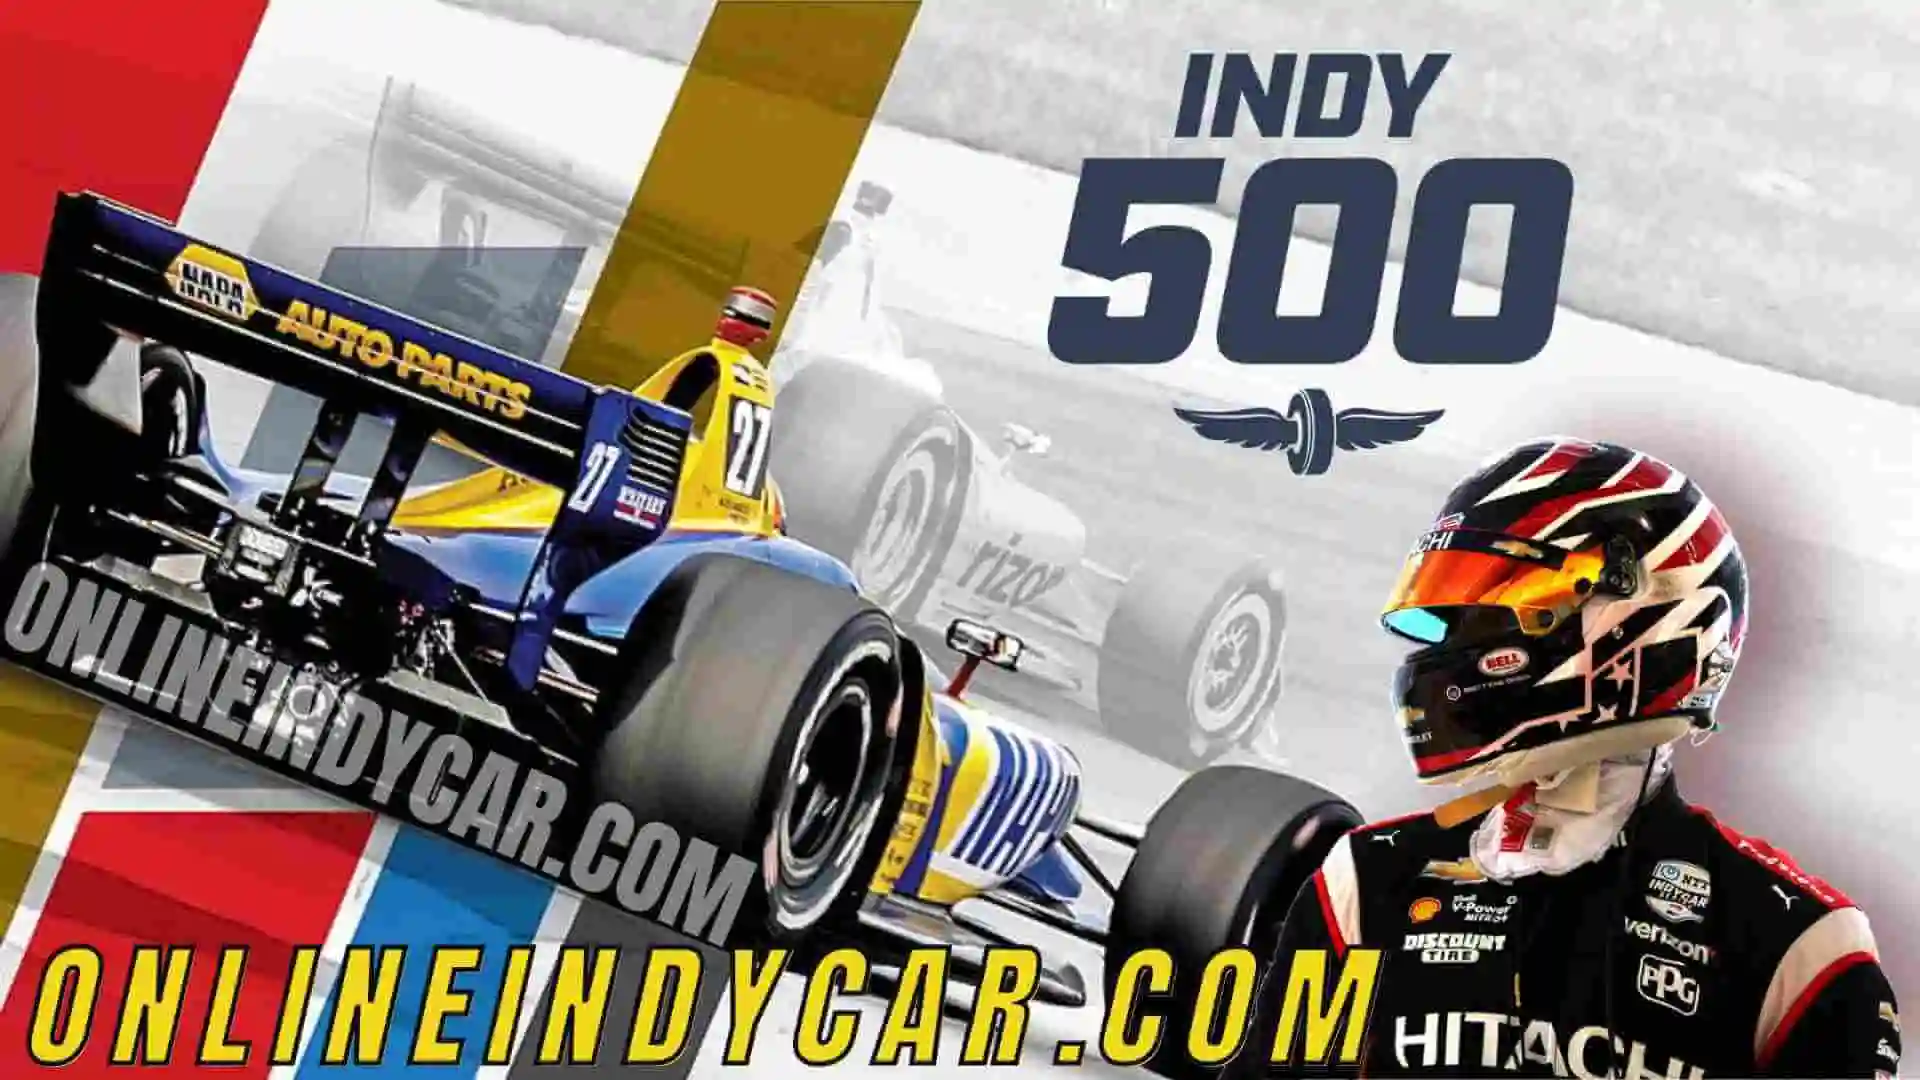 Indianapolis 500 IndyCar Live Stream